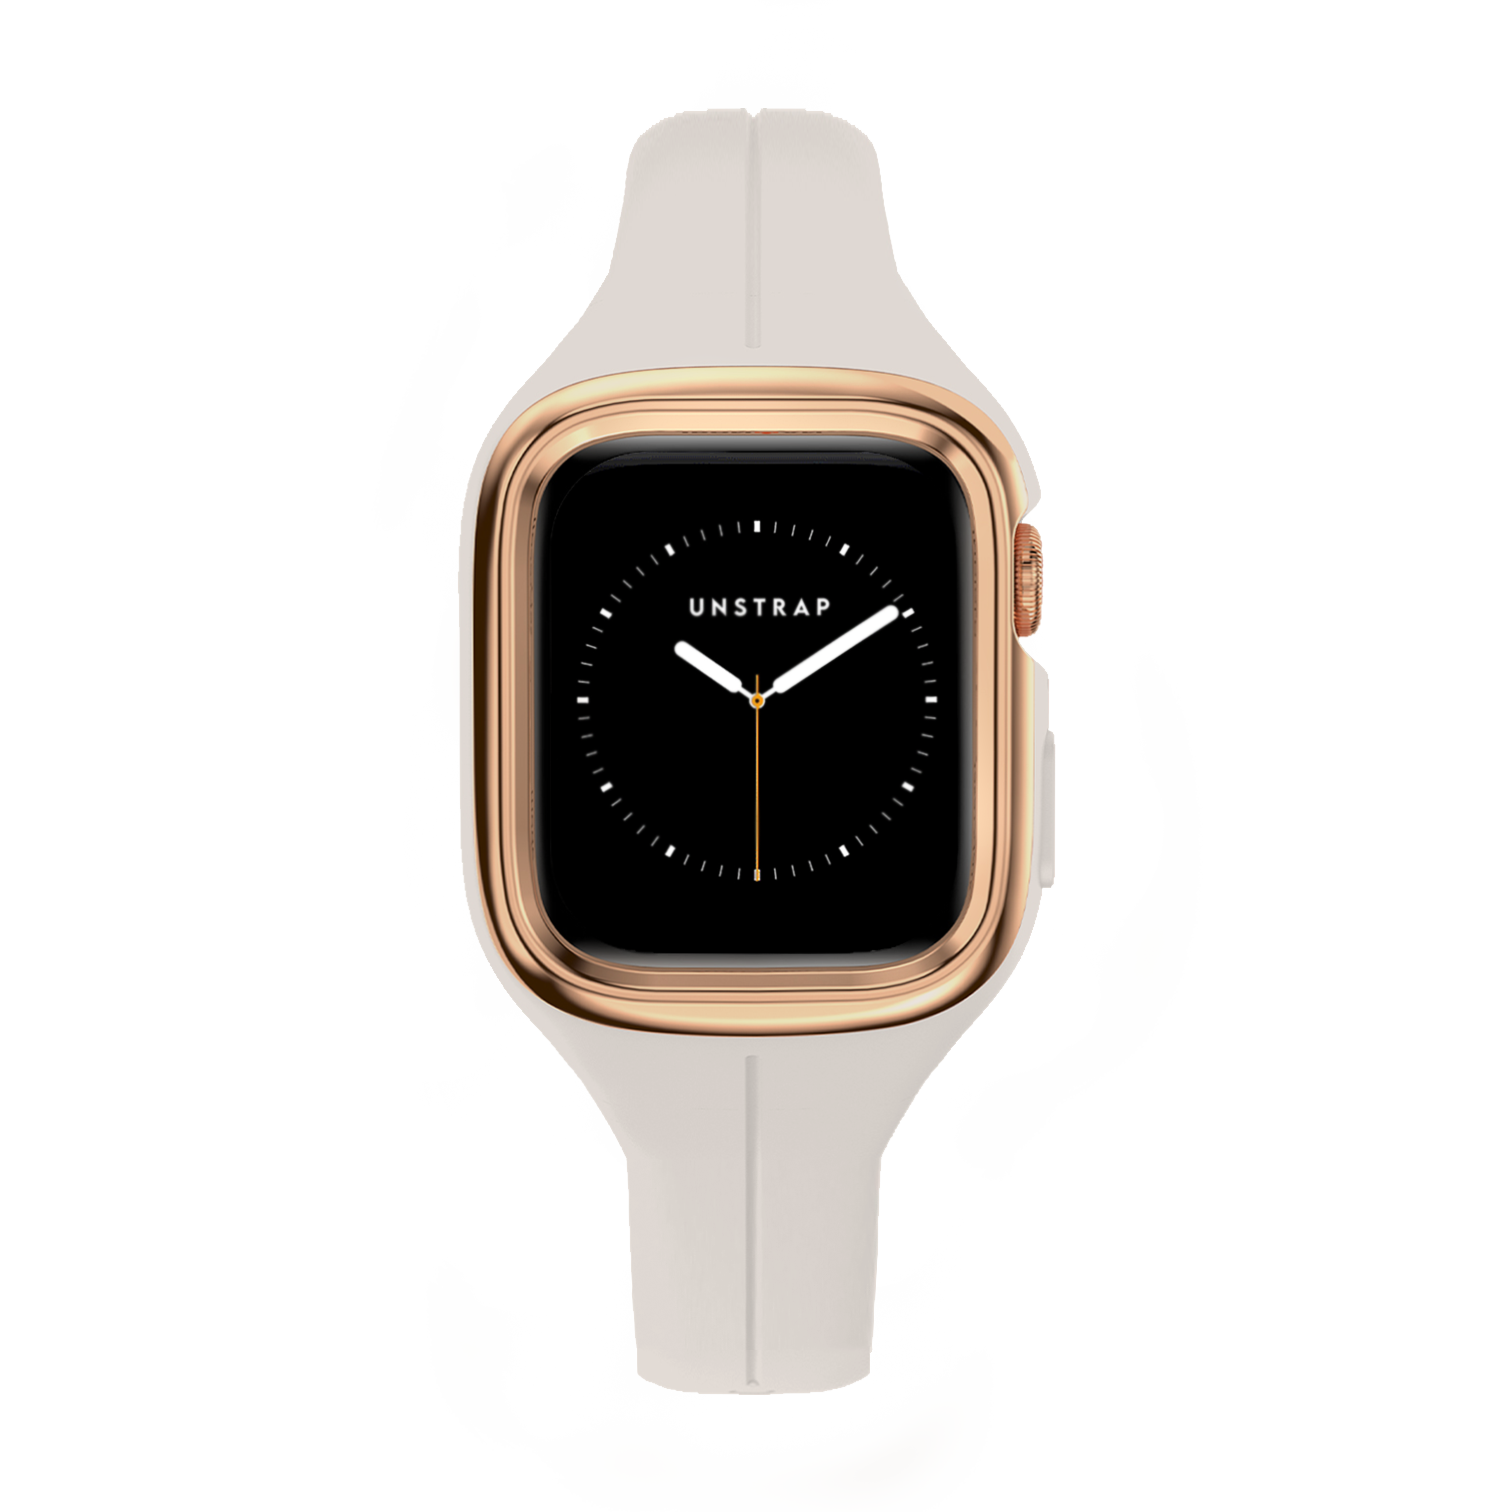 Apple Watch Case - Rio - Starlight Rose Gold